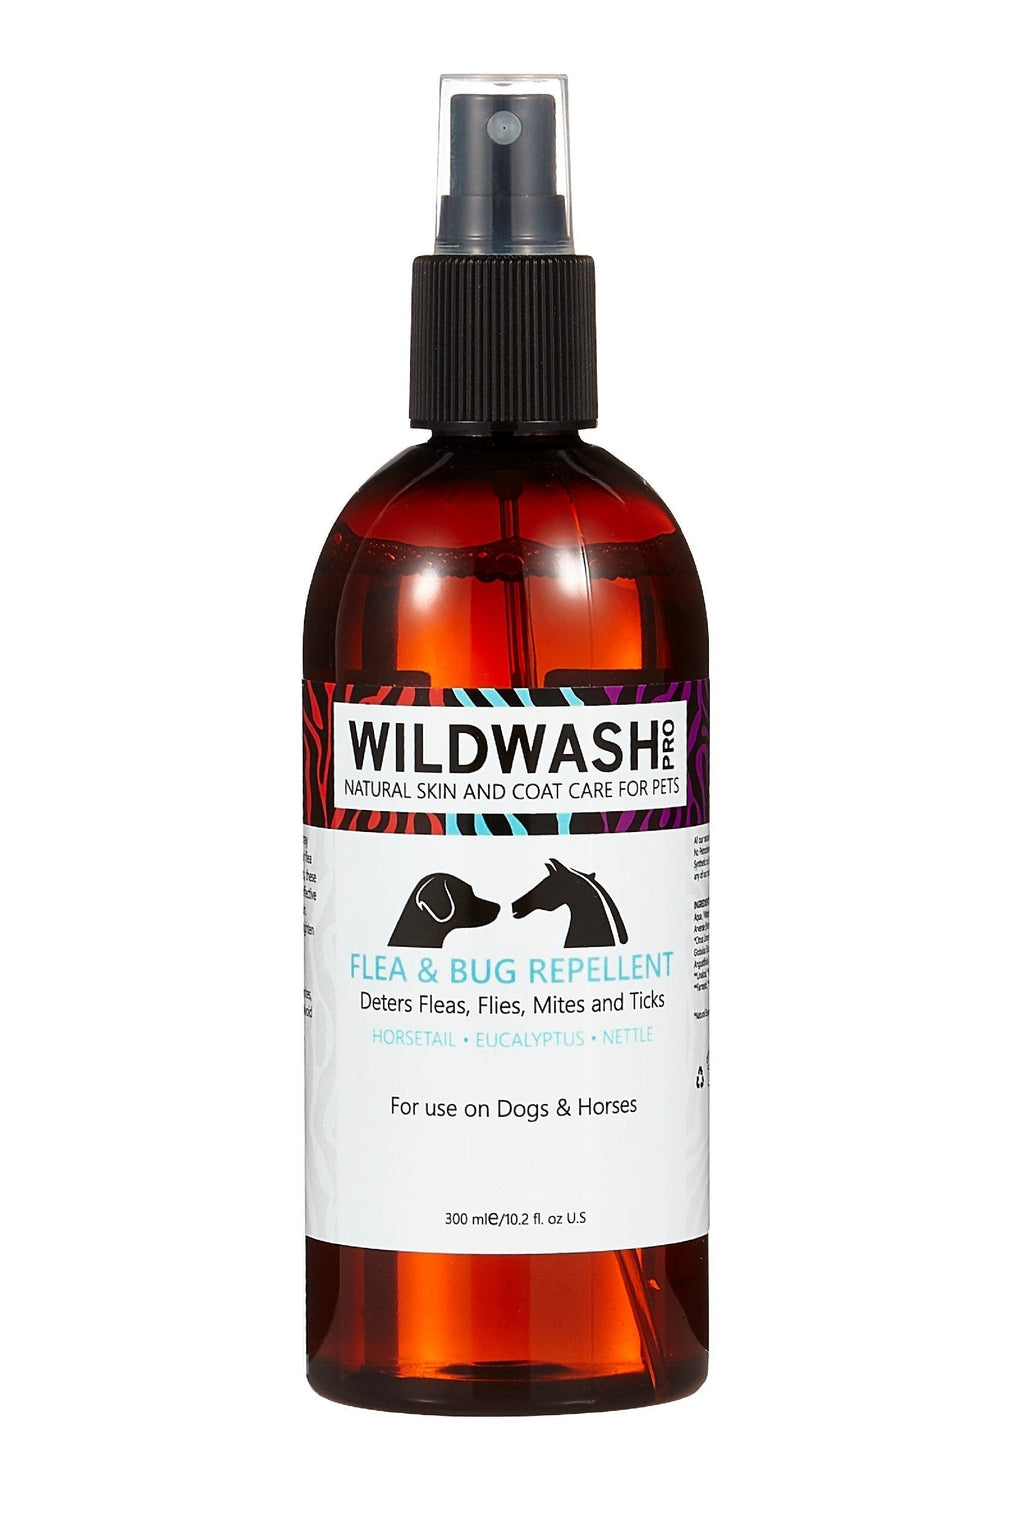 WildWash Pro Flea and Bug Repellent, 300 ml - PawsPlanet Australia